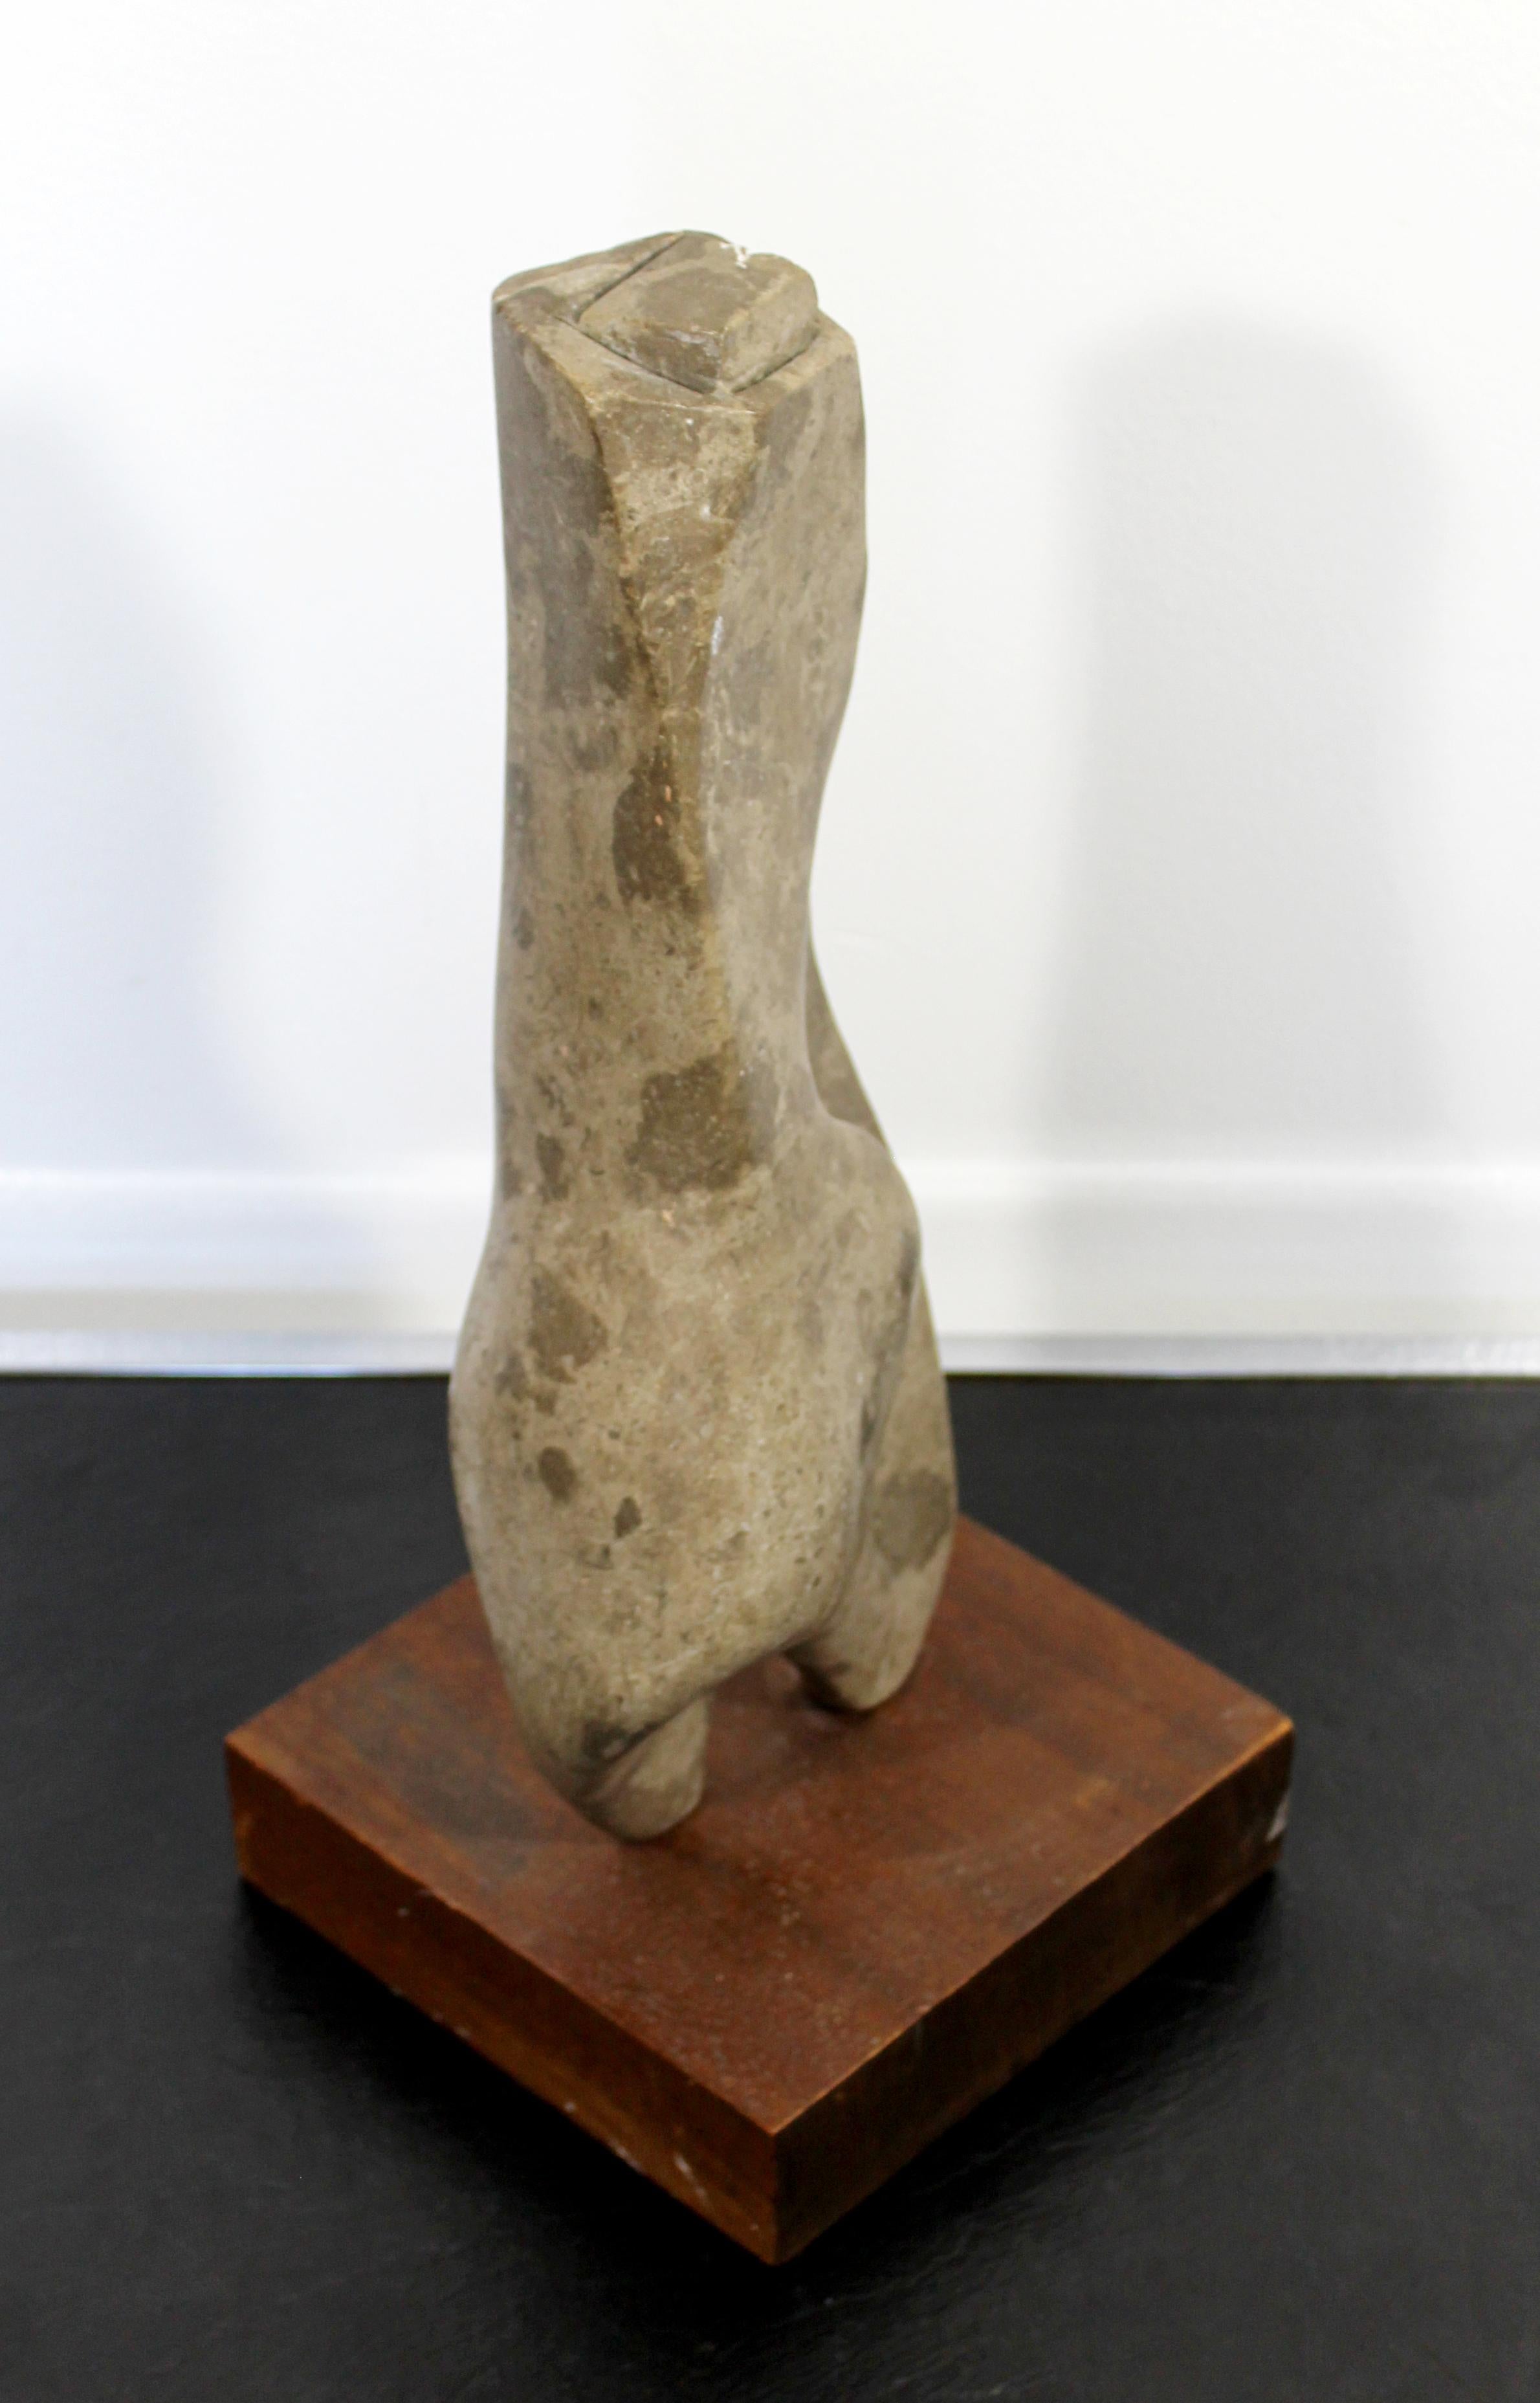 Contemporary Modern Stone Table Sculpture on Wood Base Signed Leonard Schwartz 2